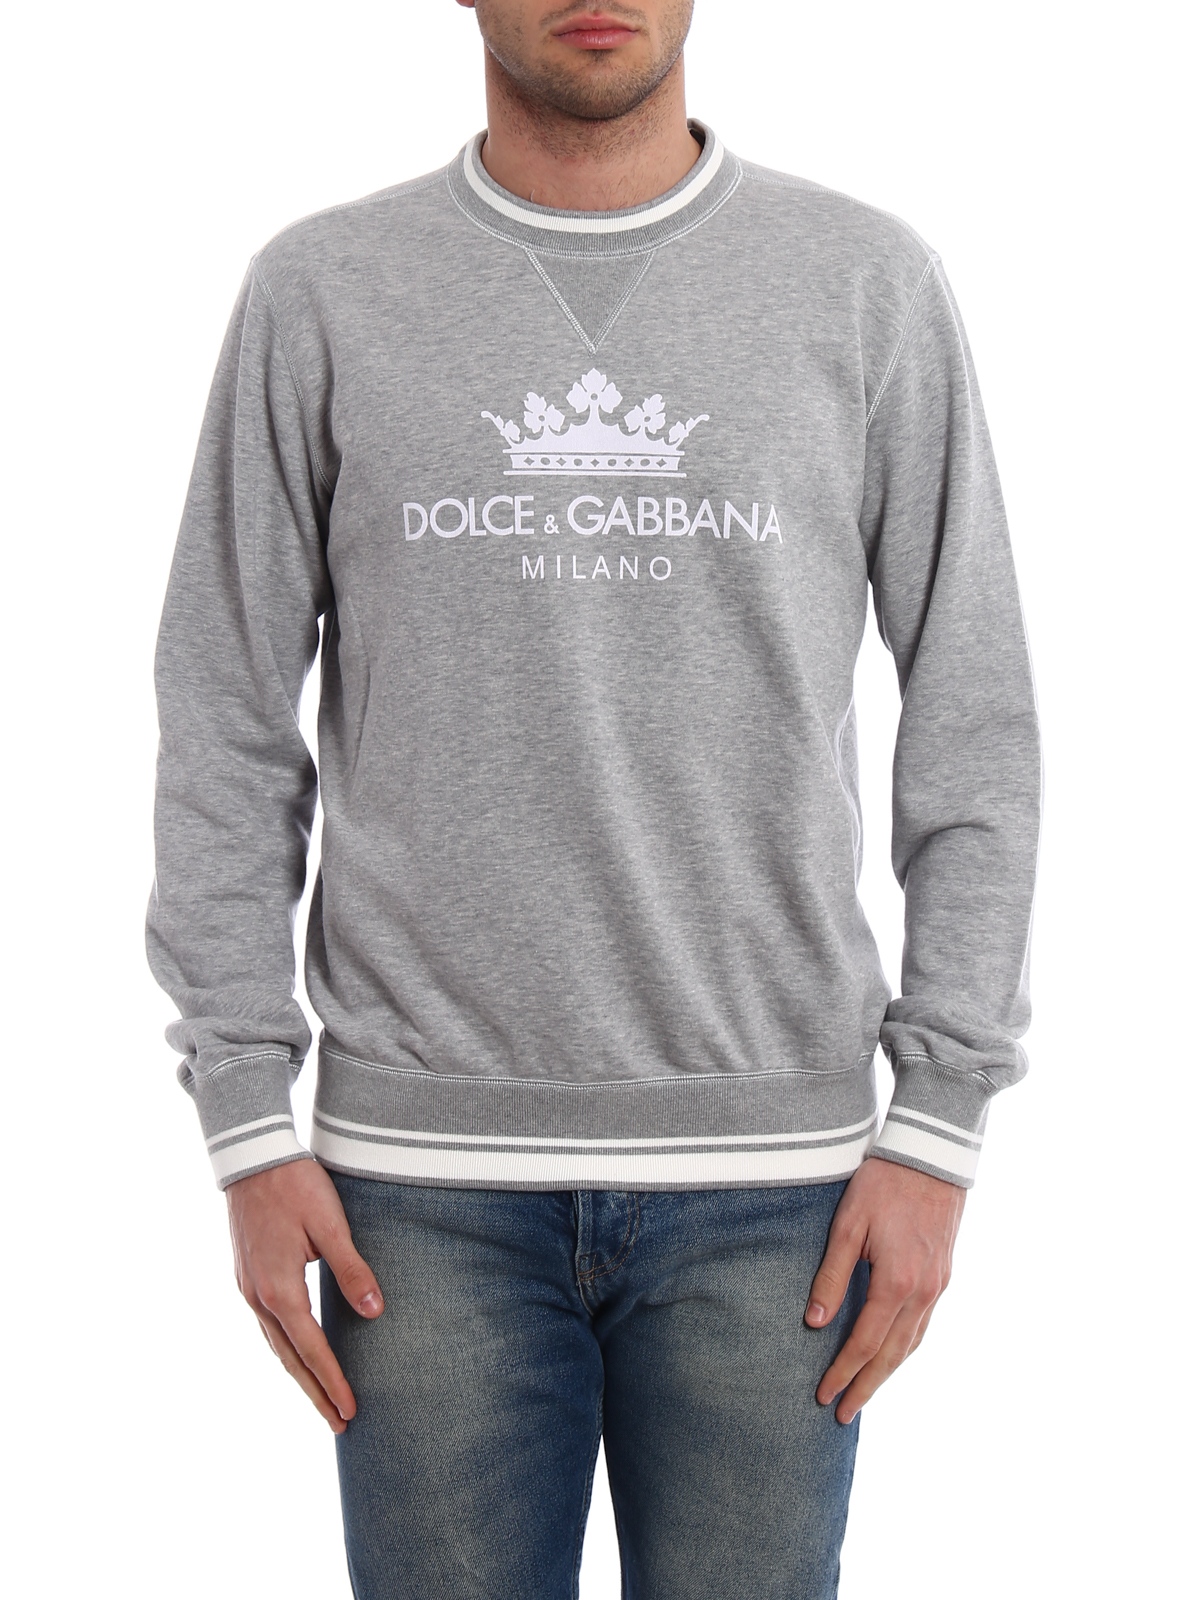 dolce and gabbana crown sweatshirt